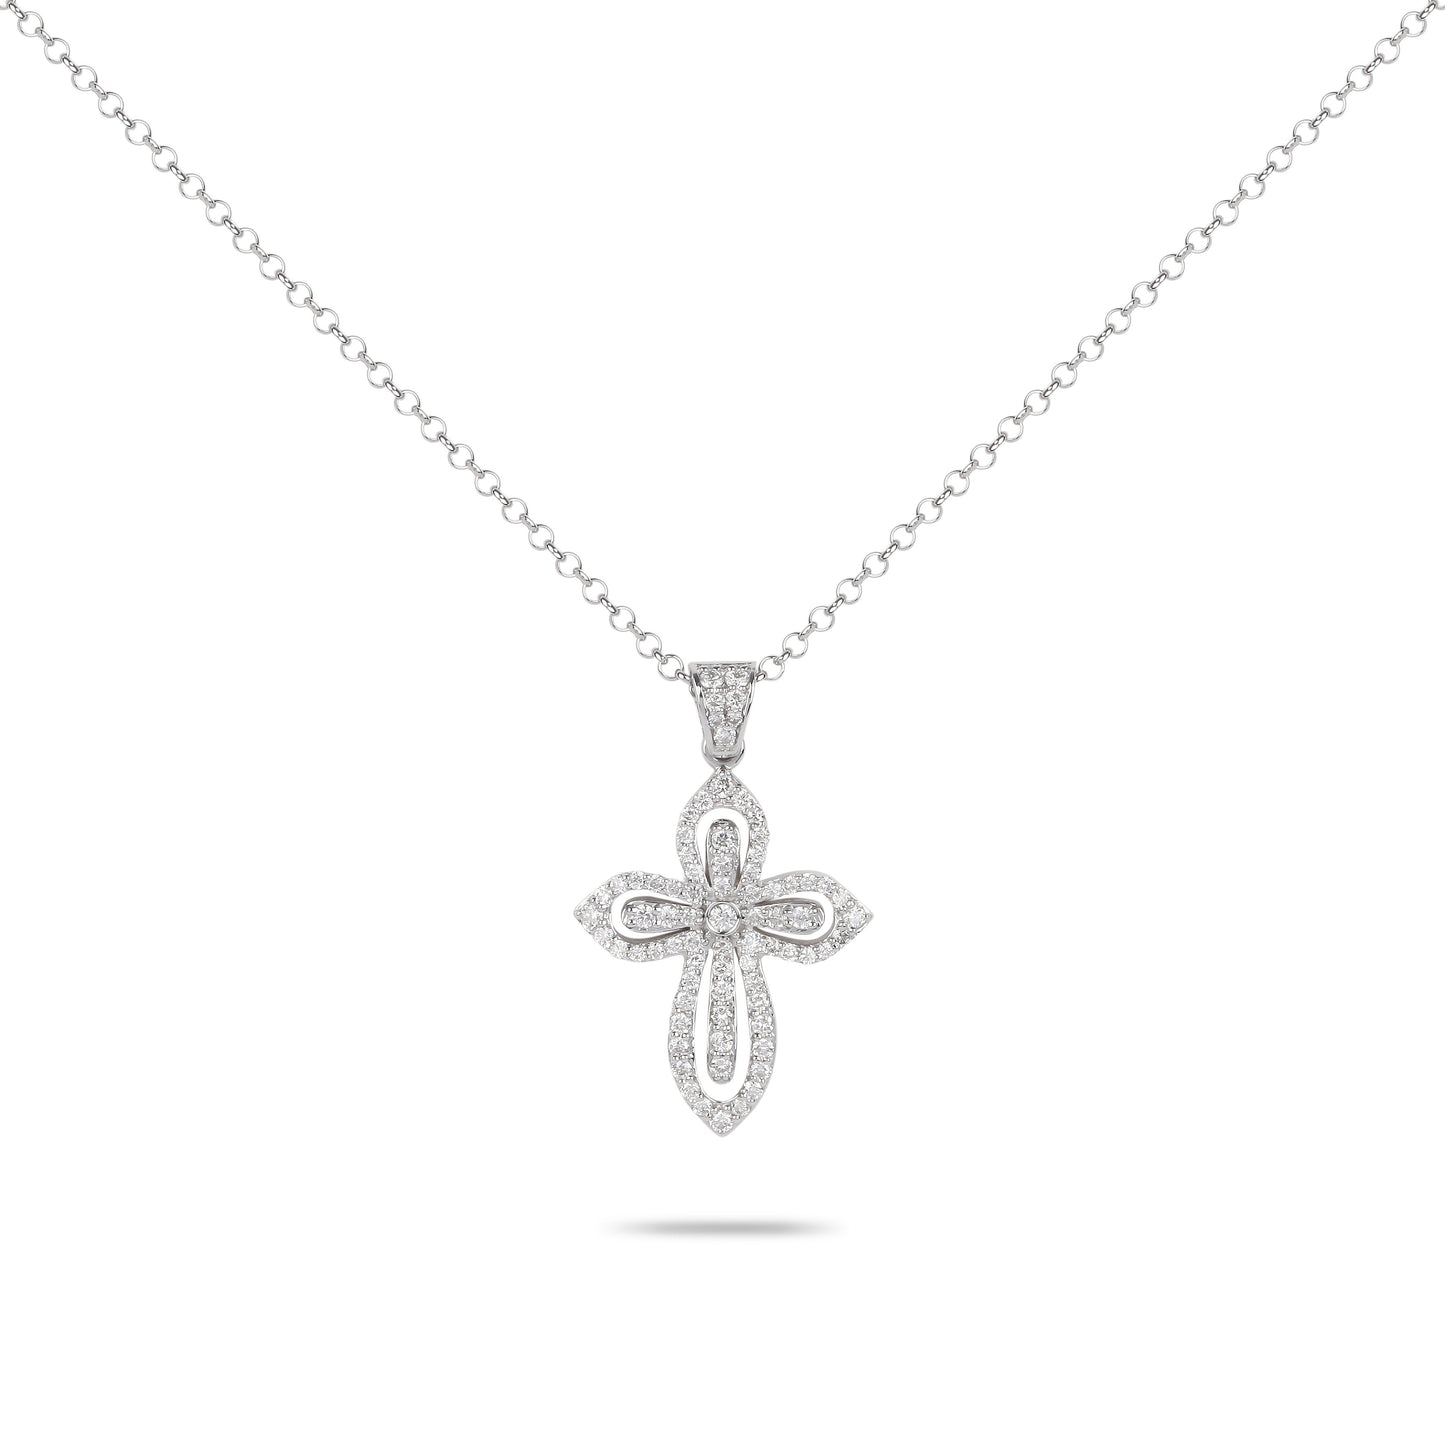 Diamond Cross Necklace | Buy necklace online | Best Necklace Design